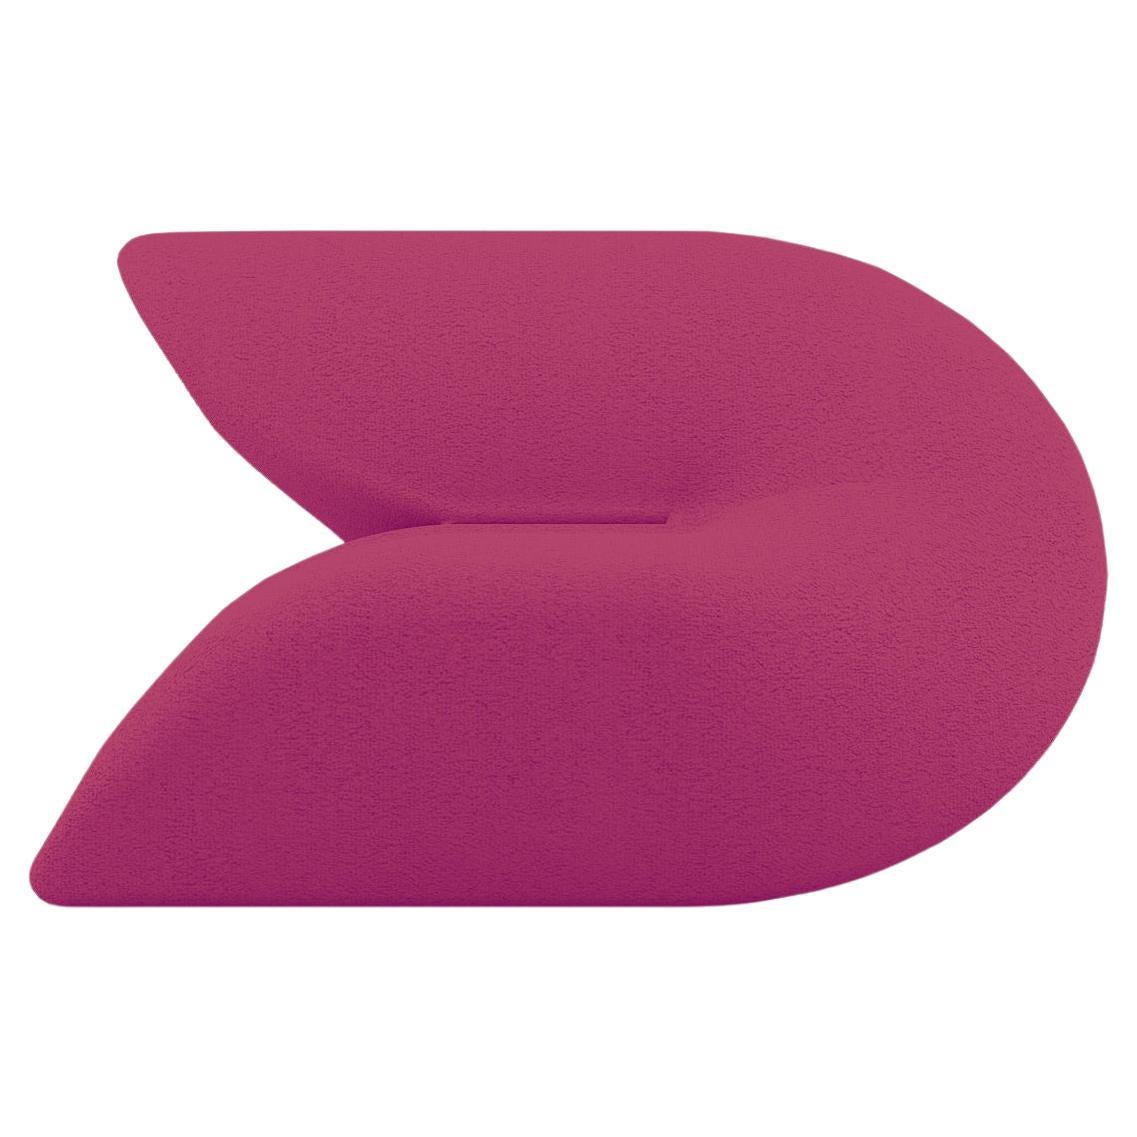 Delta Armchair - Modern Purple Upholstered Armchair